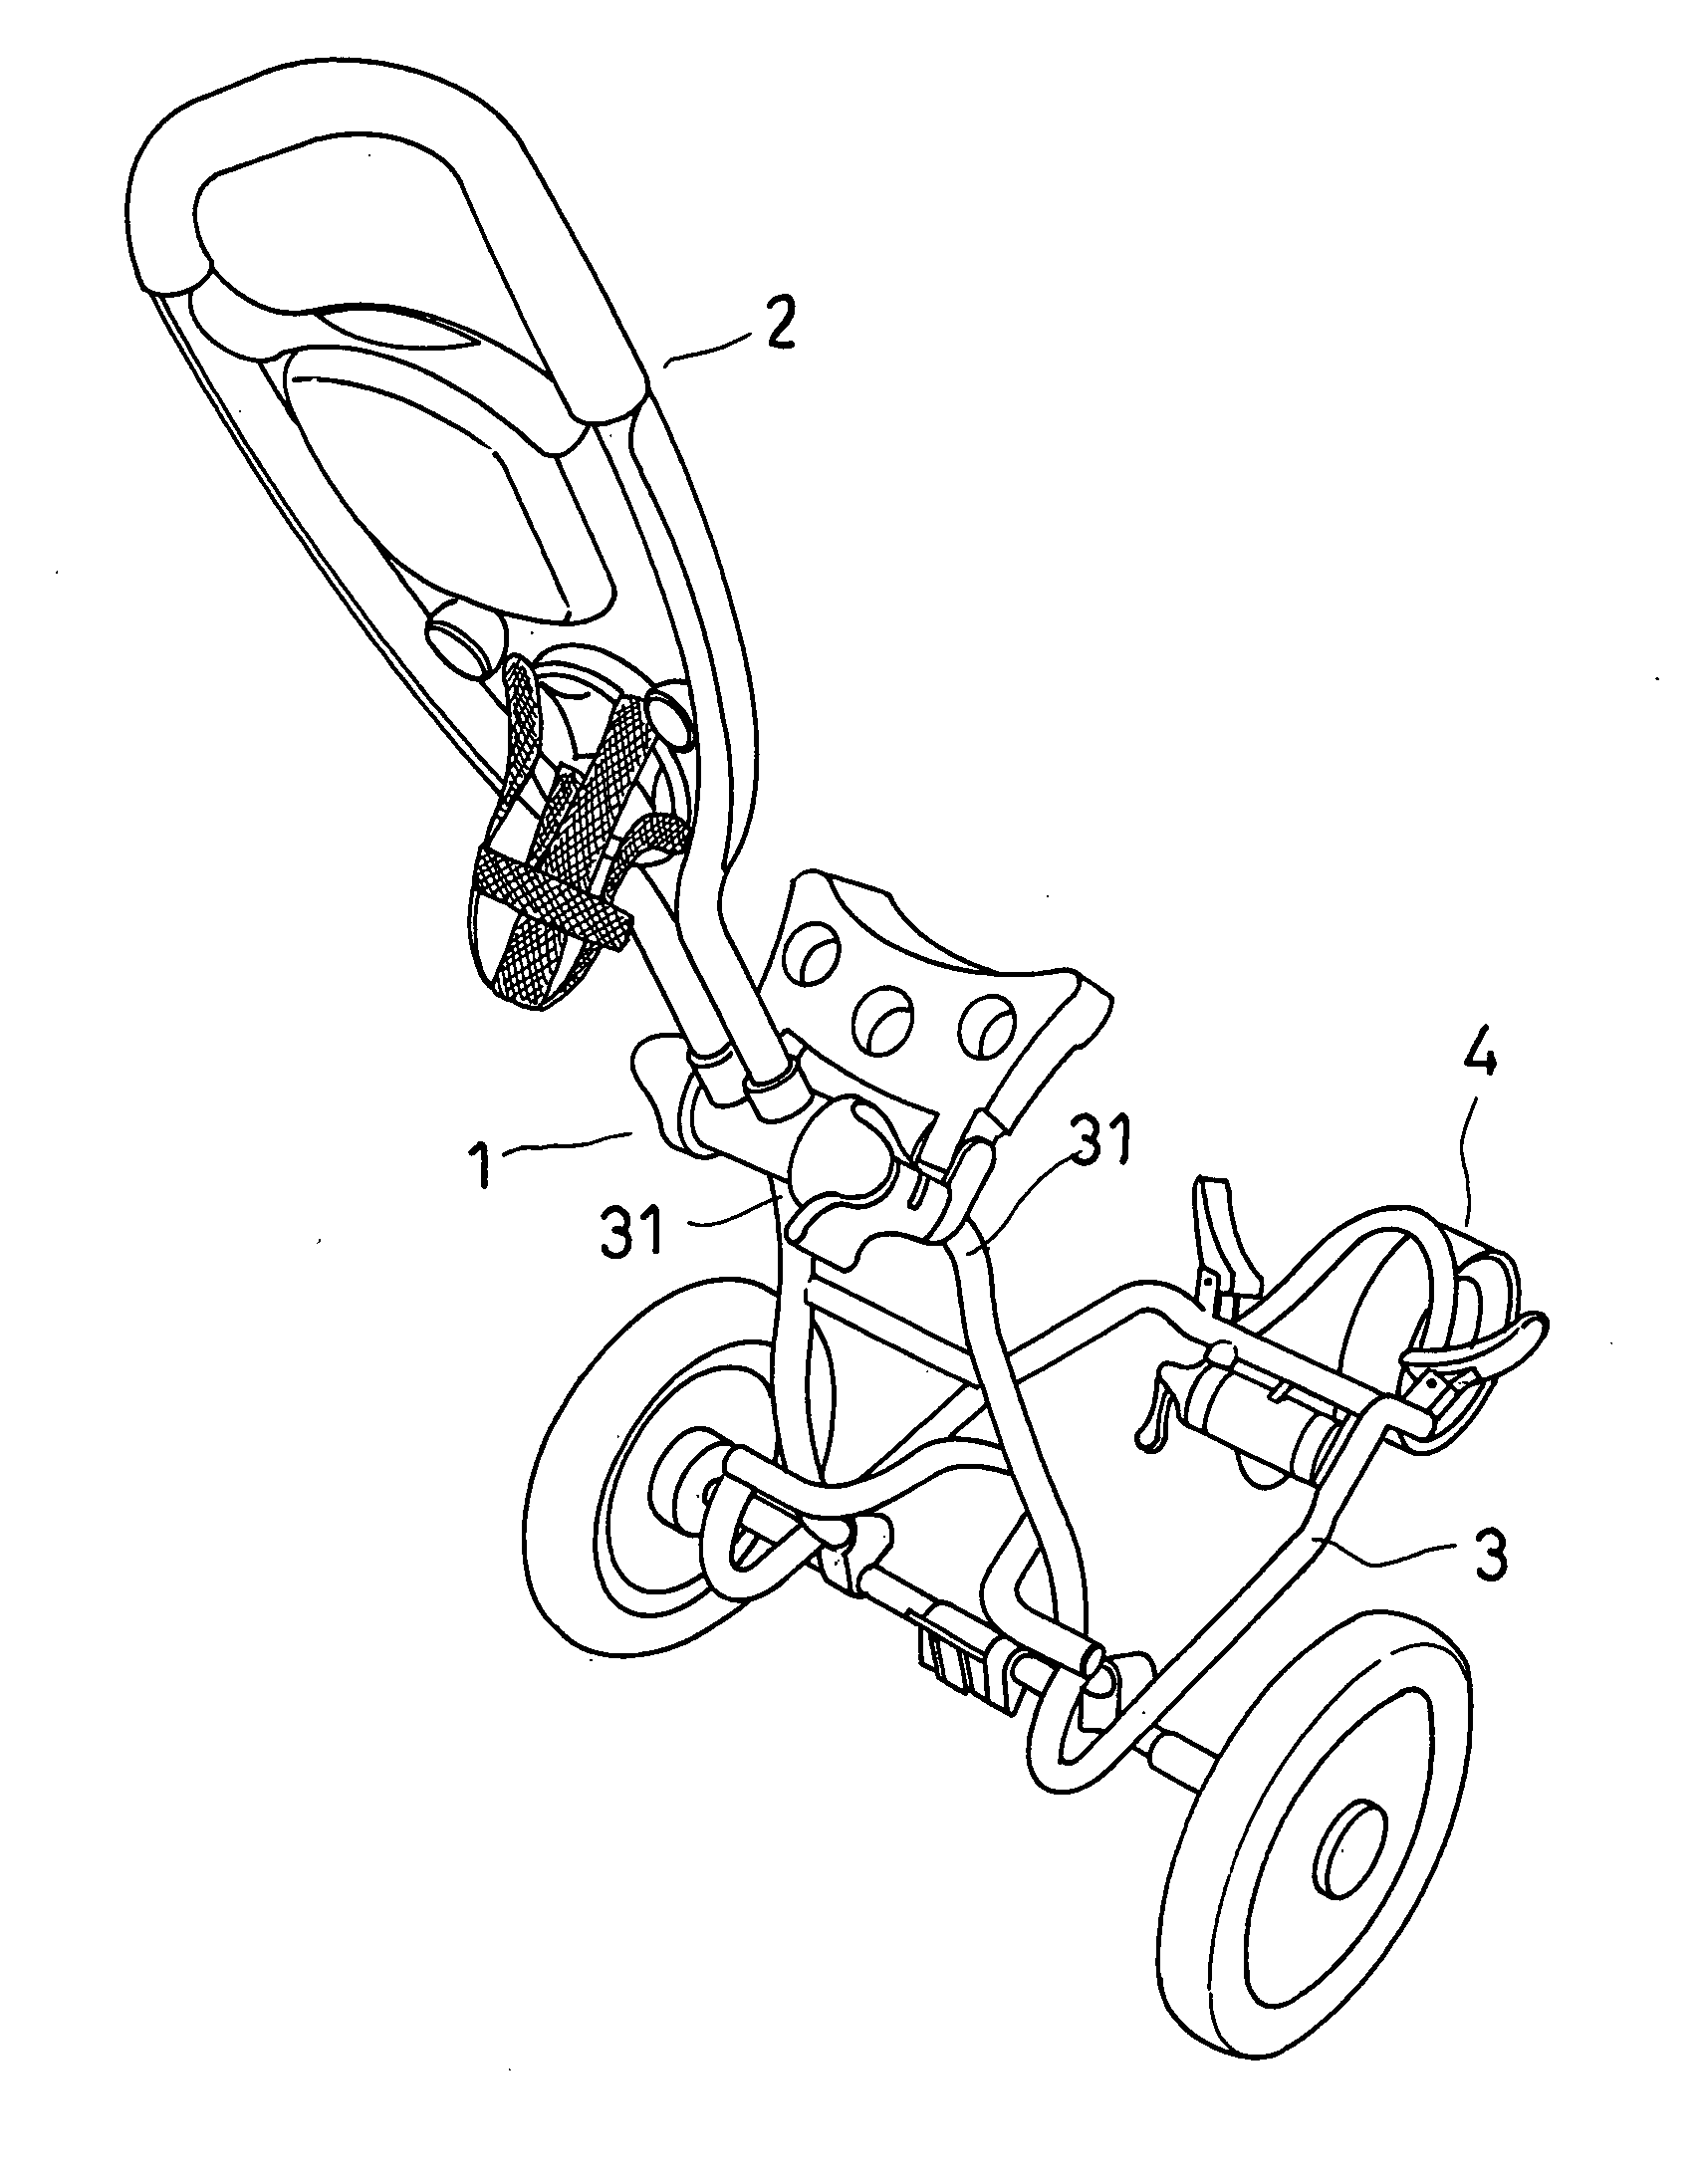 Folding structure of a golf cart